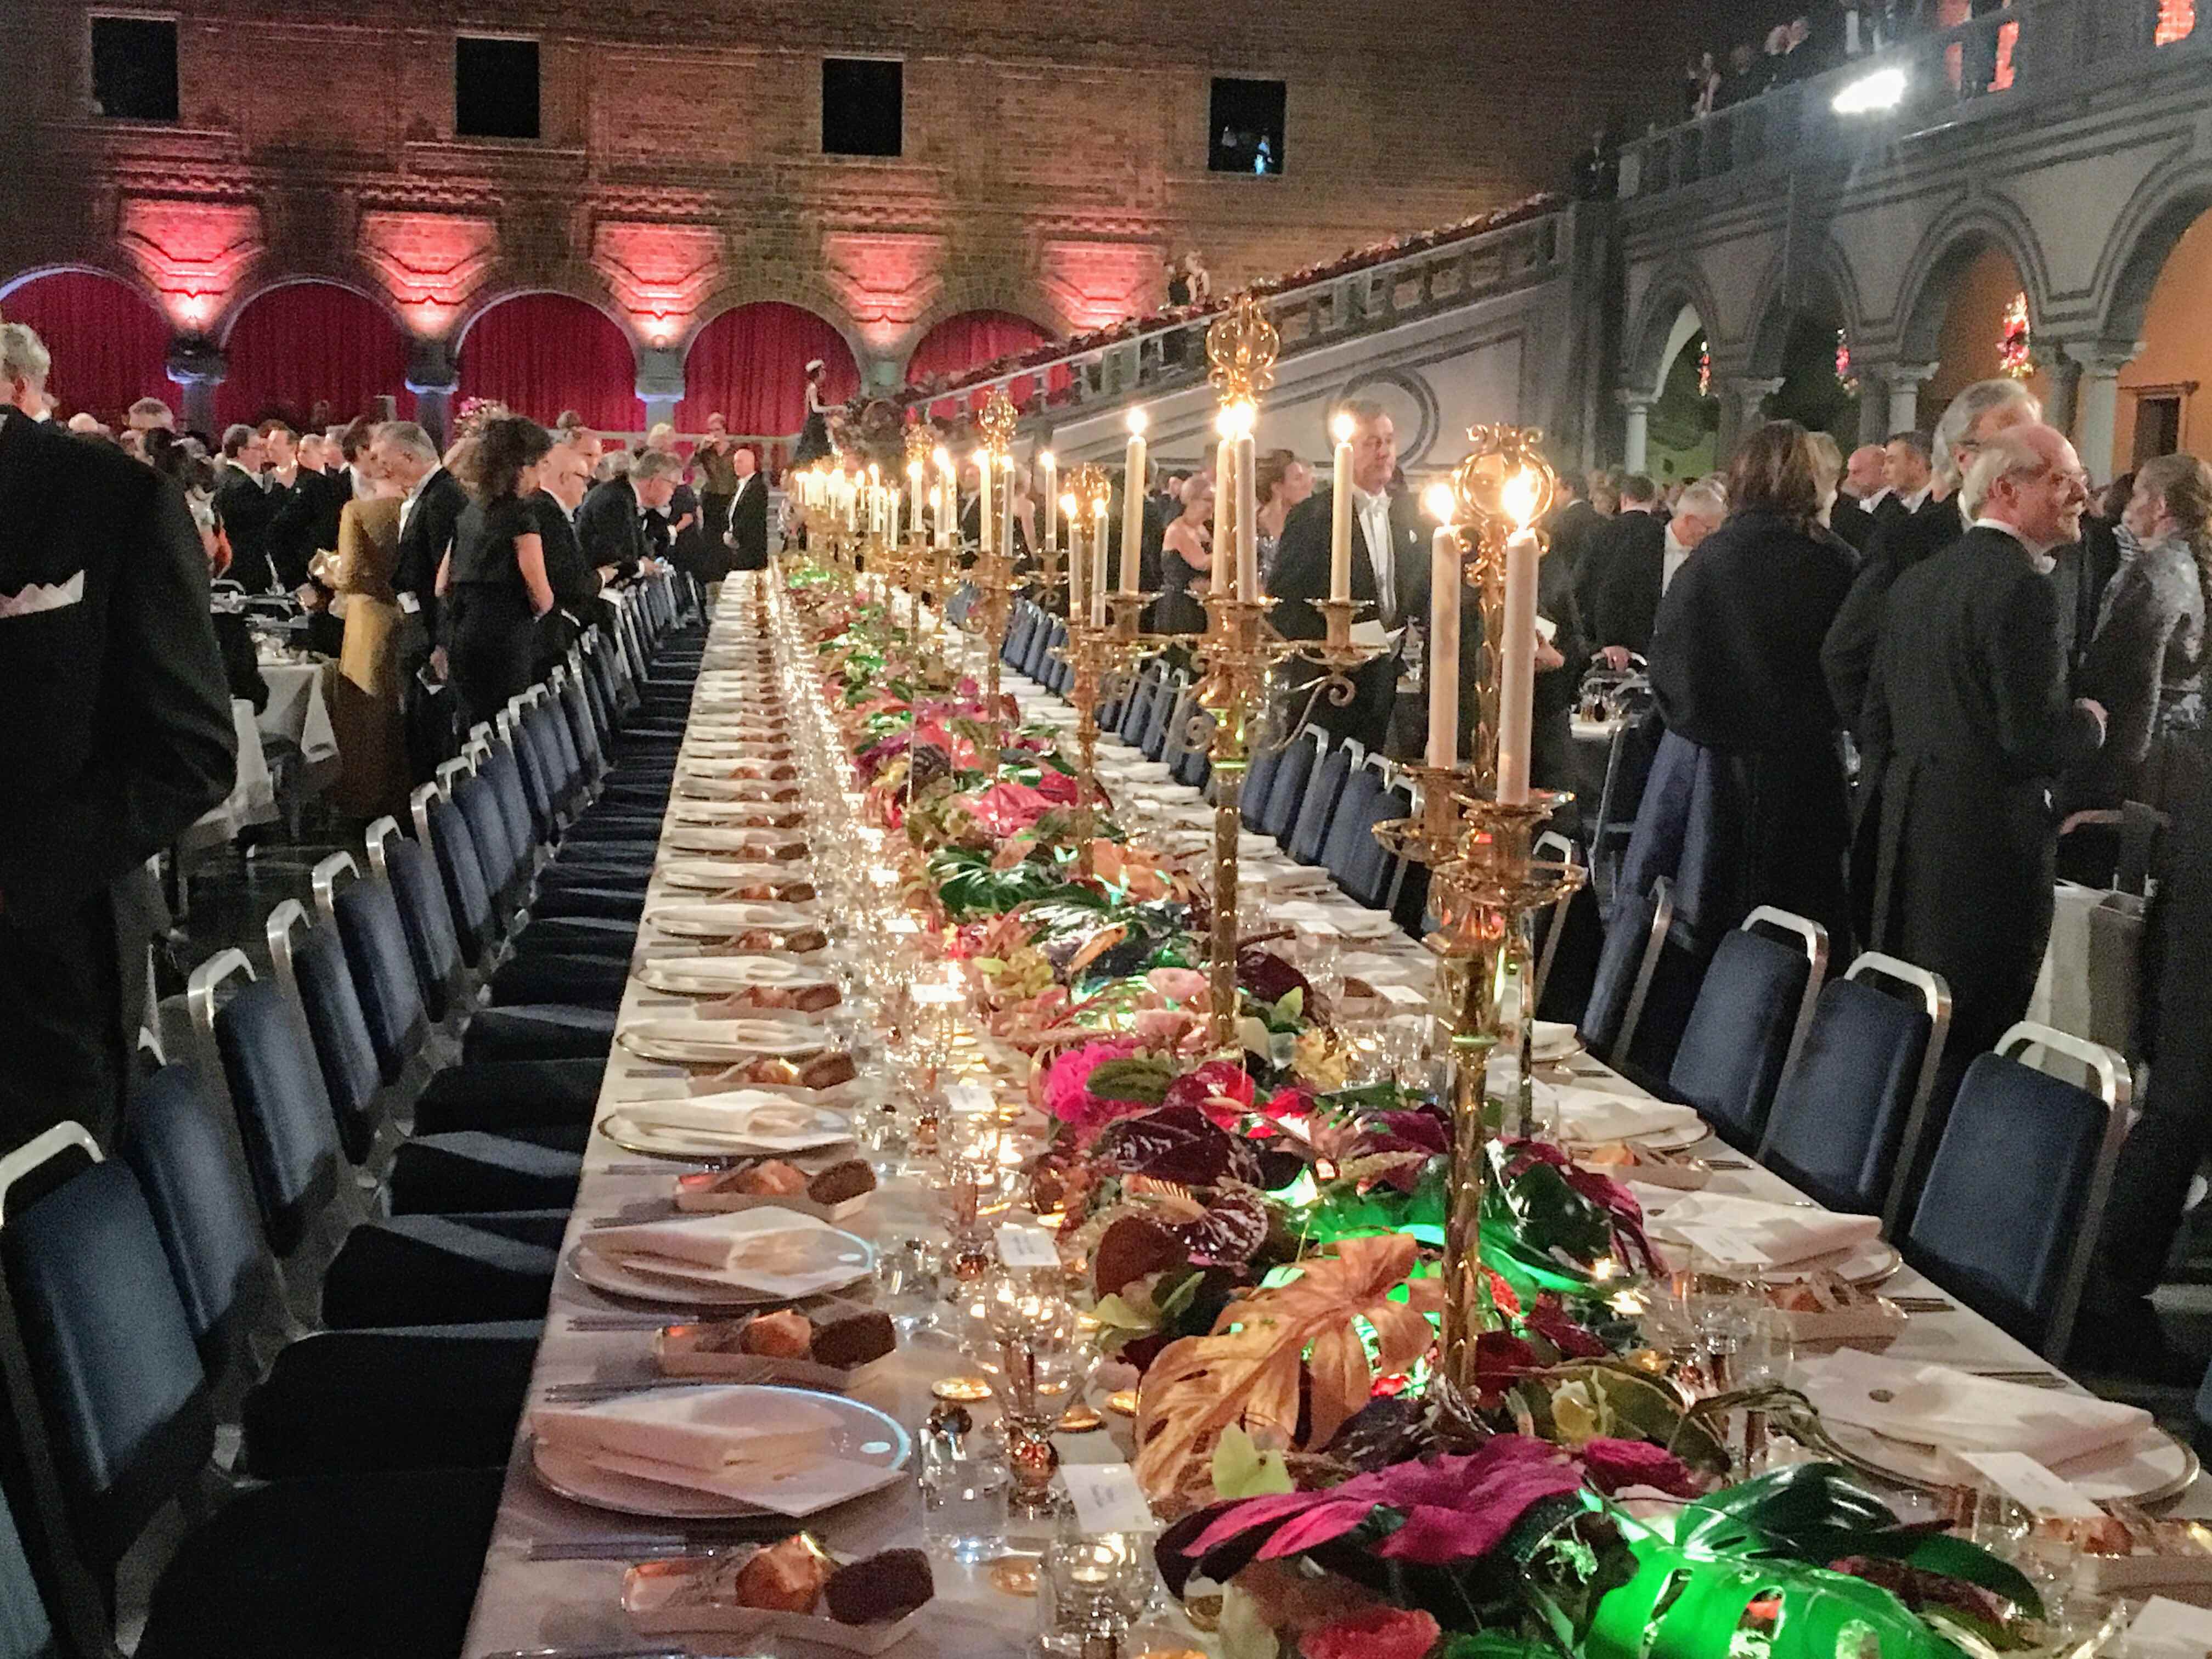 The Nobel banquet table